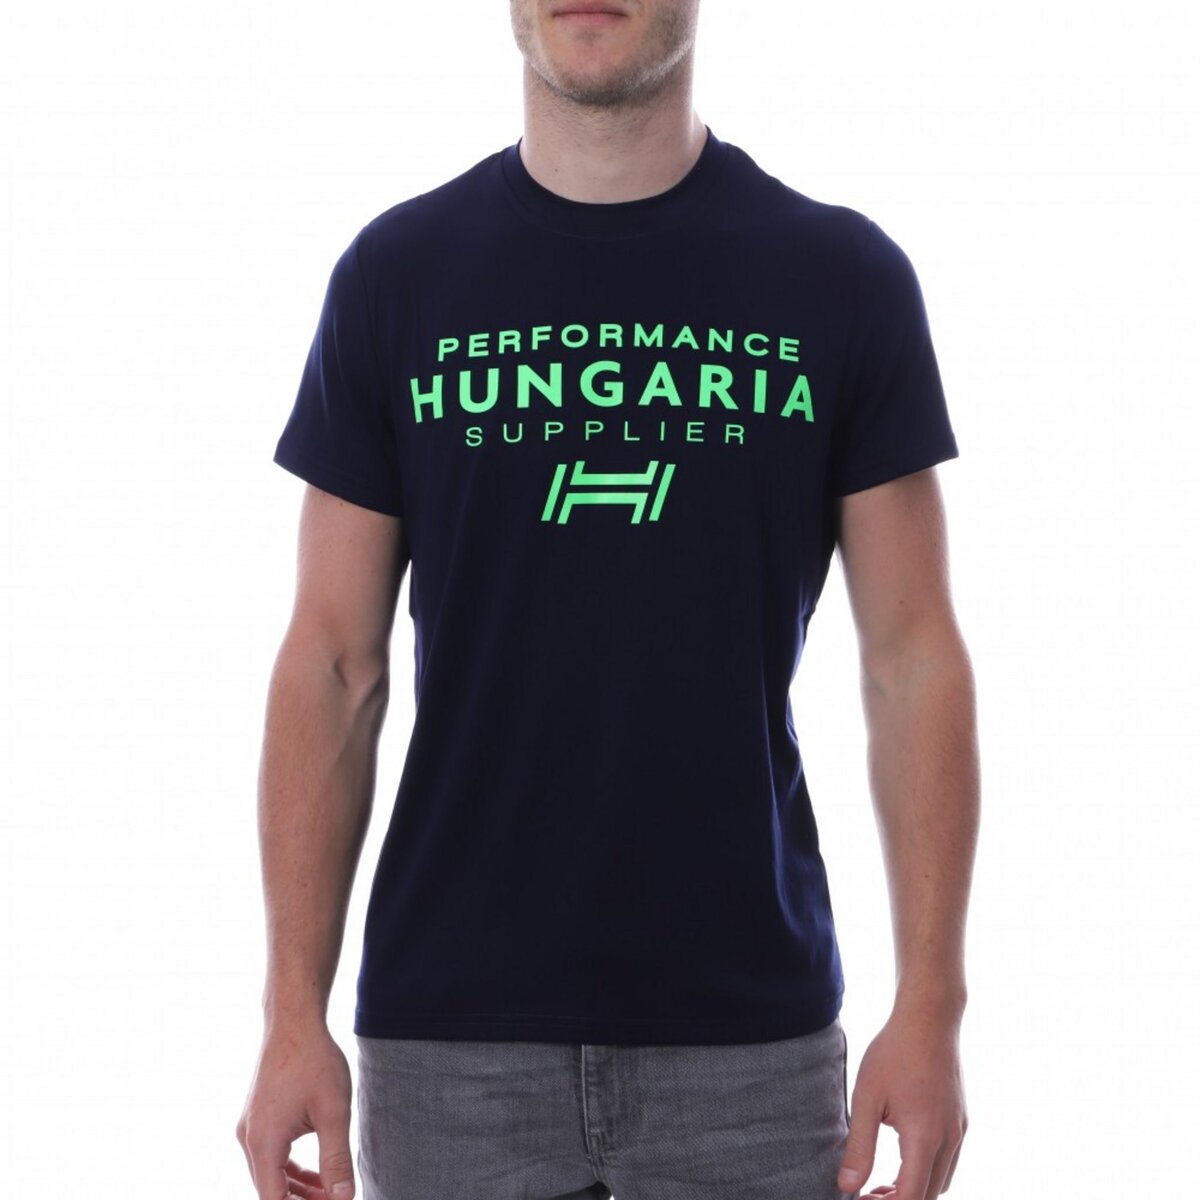 HUNGARIA T-shirt bleu marine homme Hungaria Performance Supplier